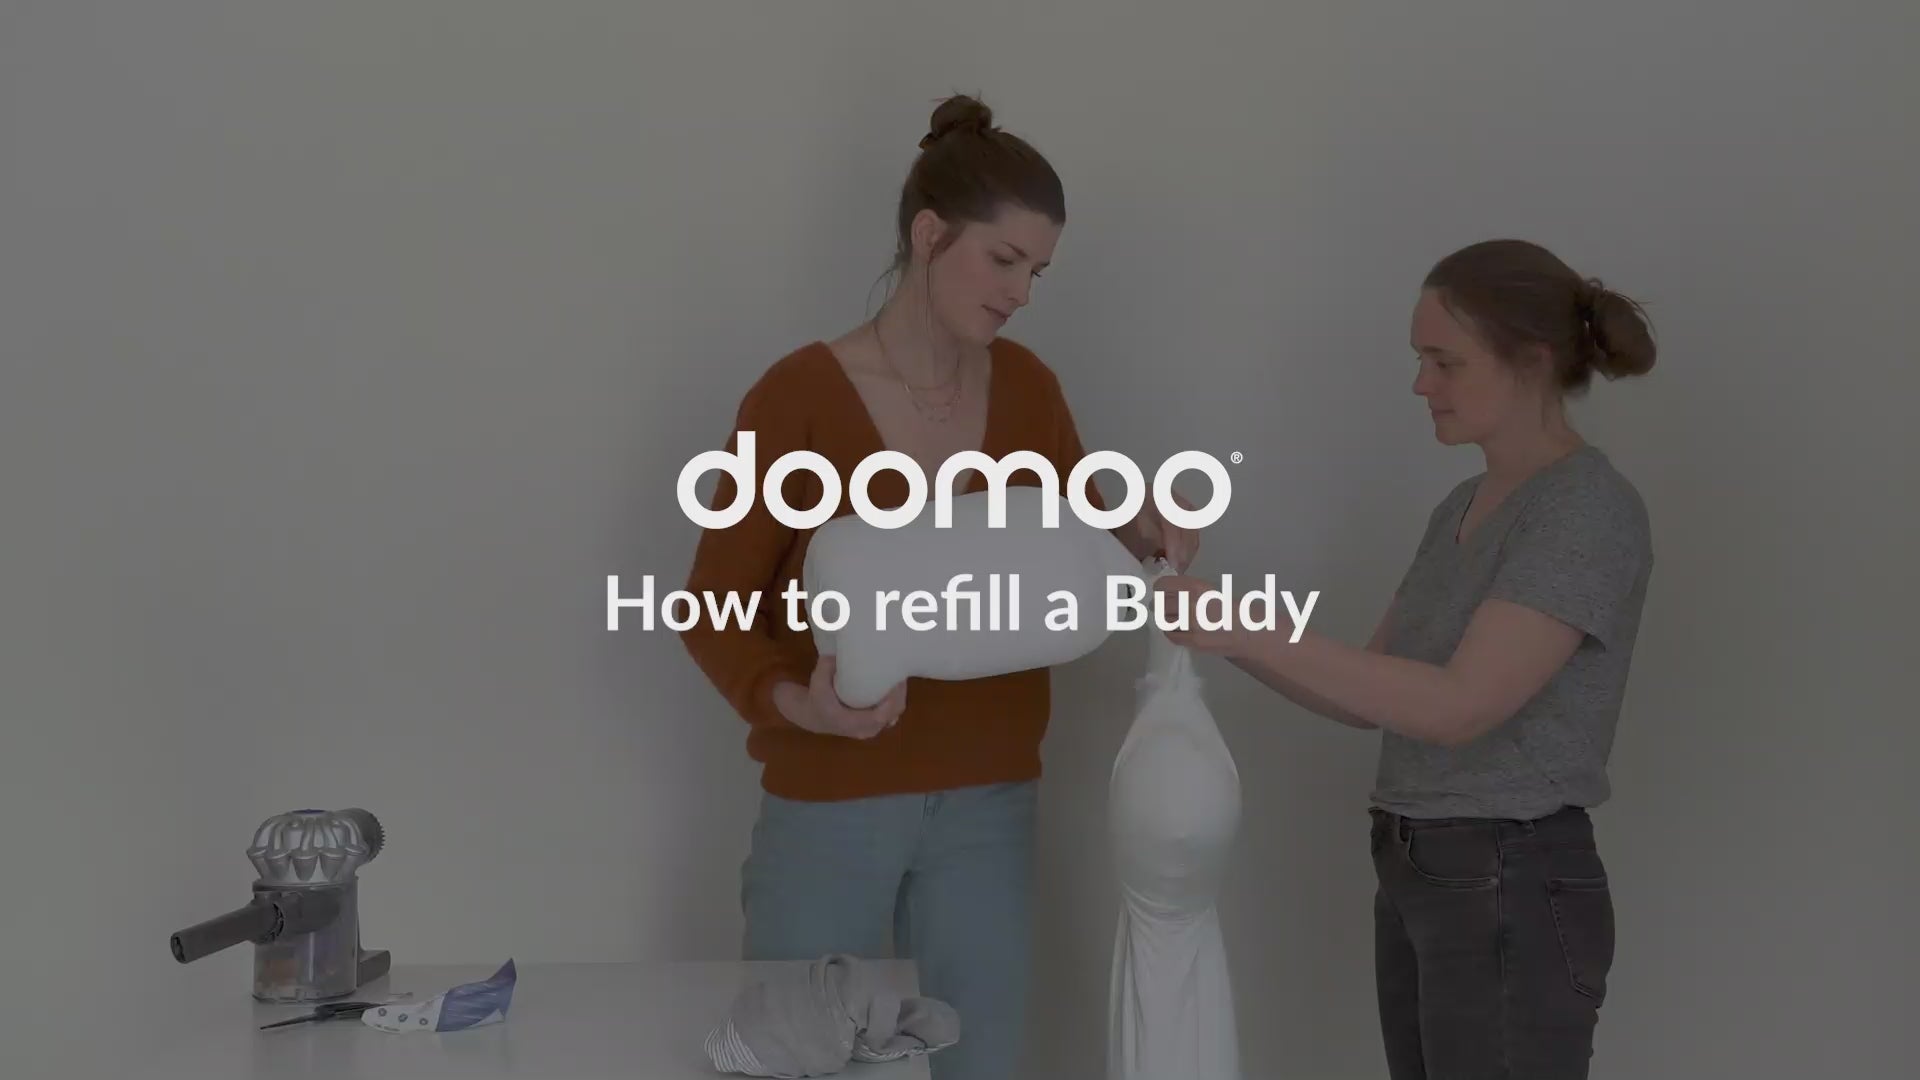 tutorial video on refilling doomoo buddy